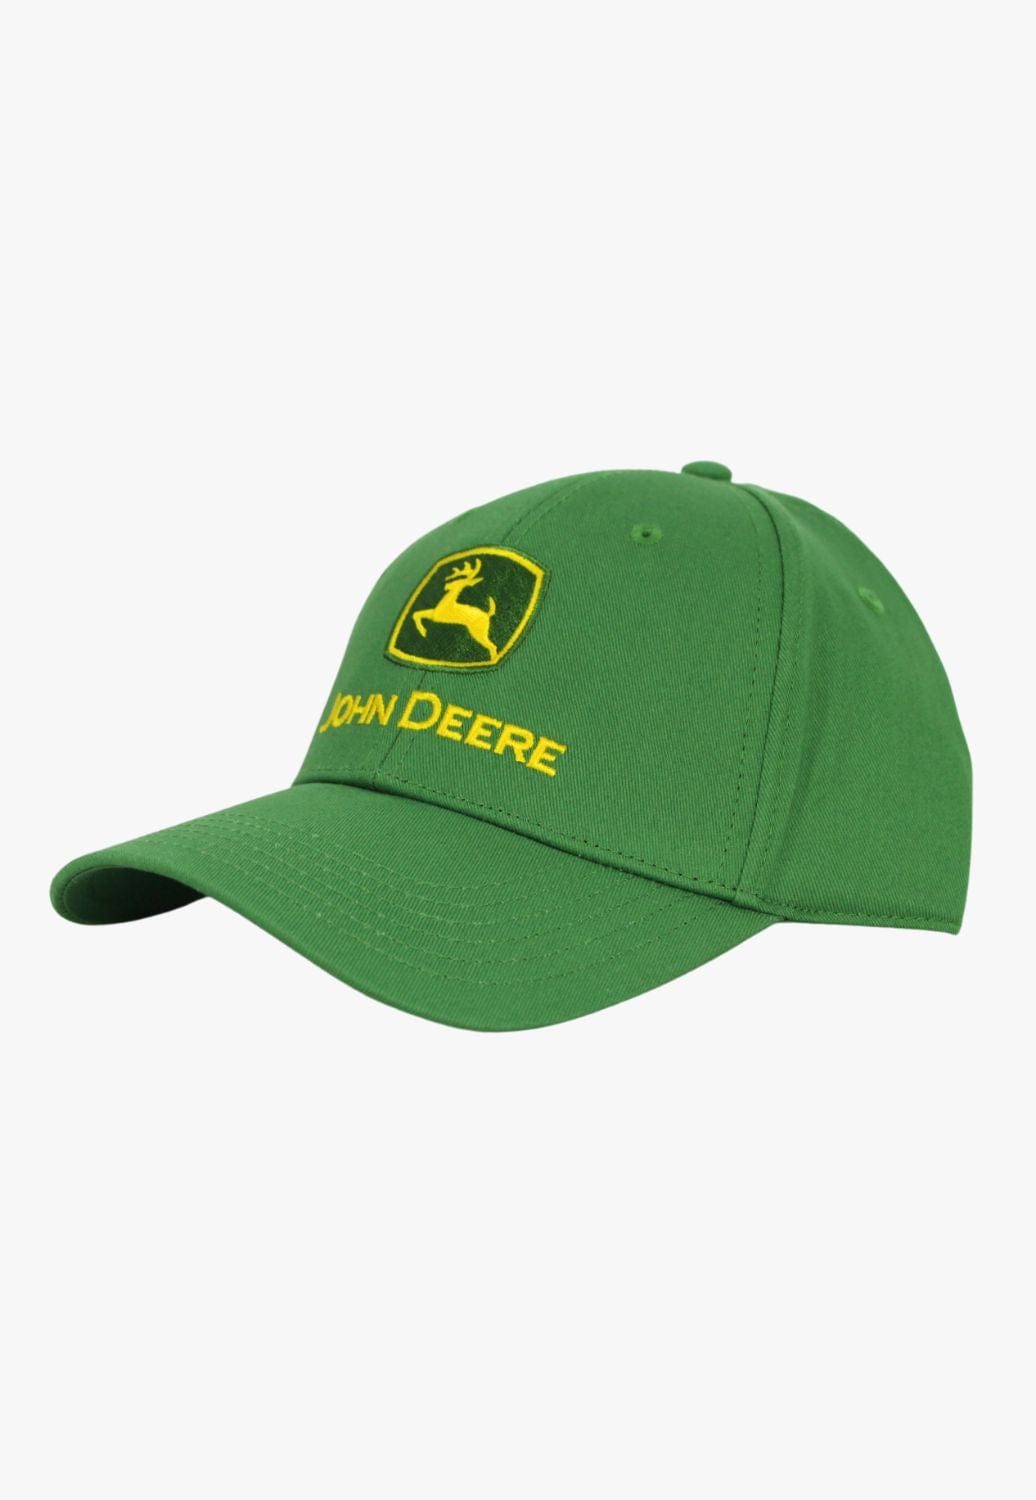 John Deere HATS - Caps Green/Yellow John Deere Logo Cap